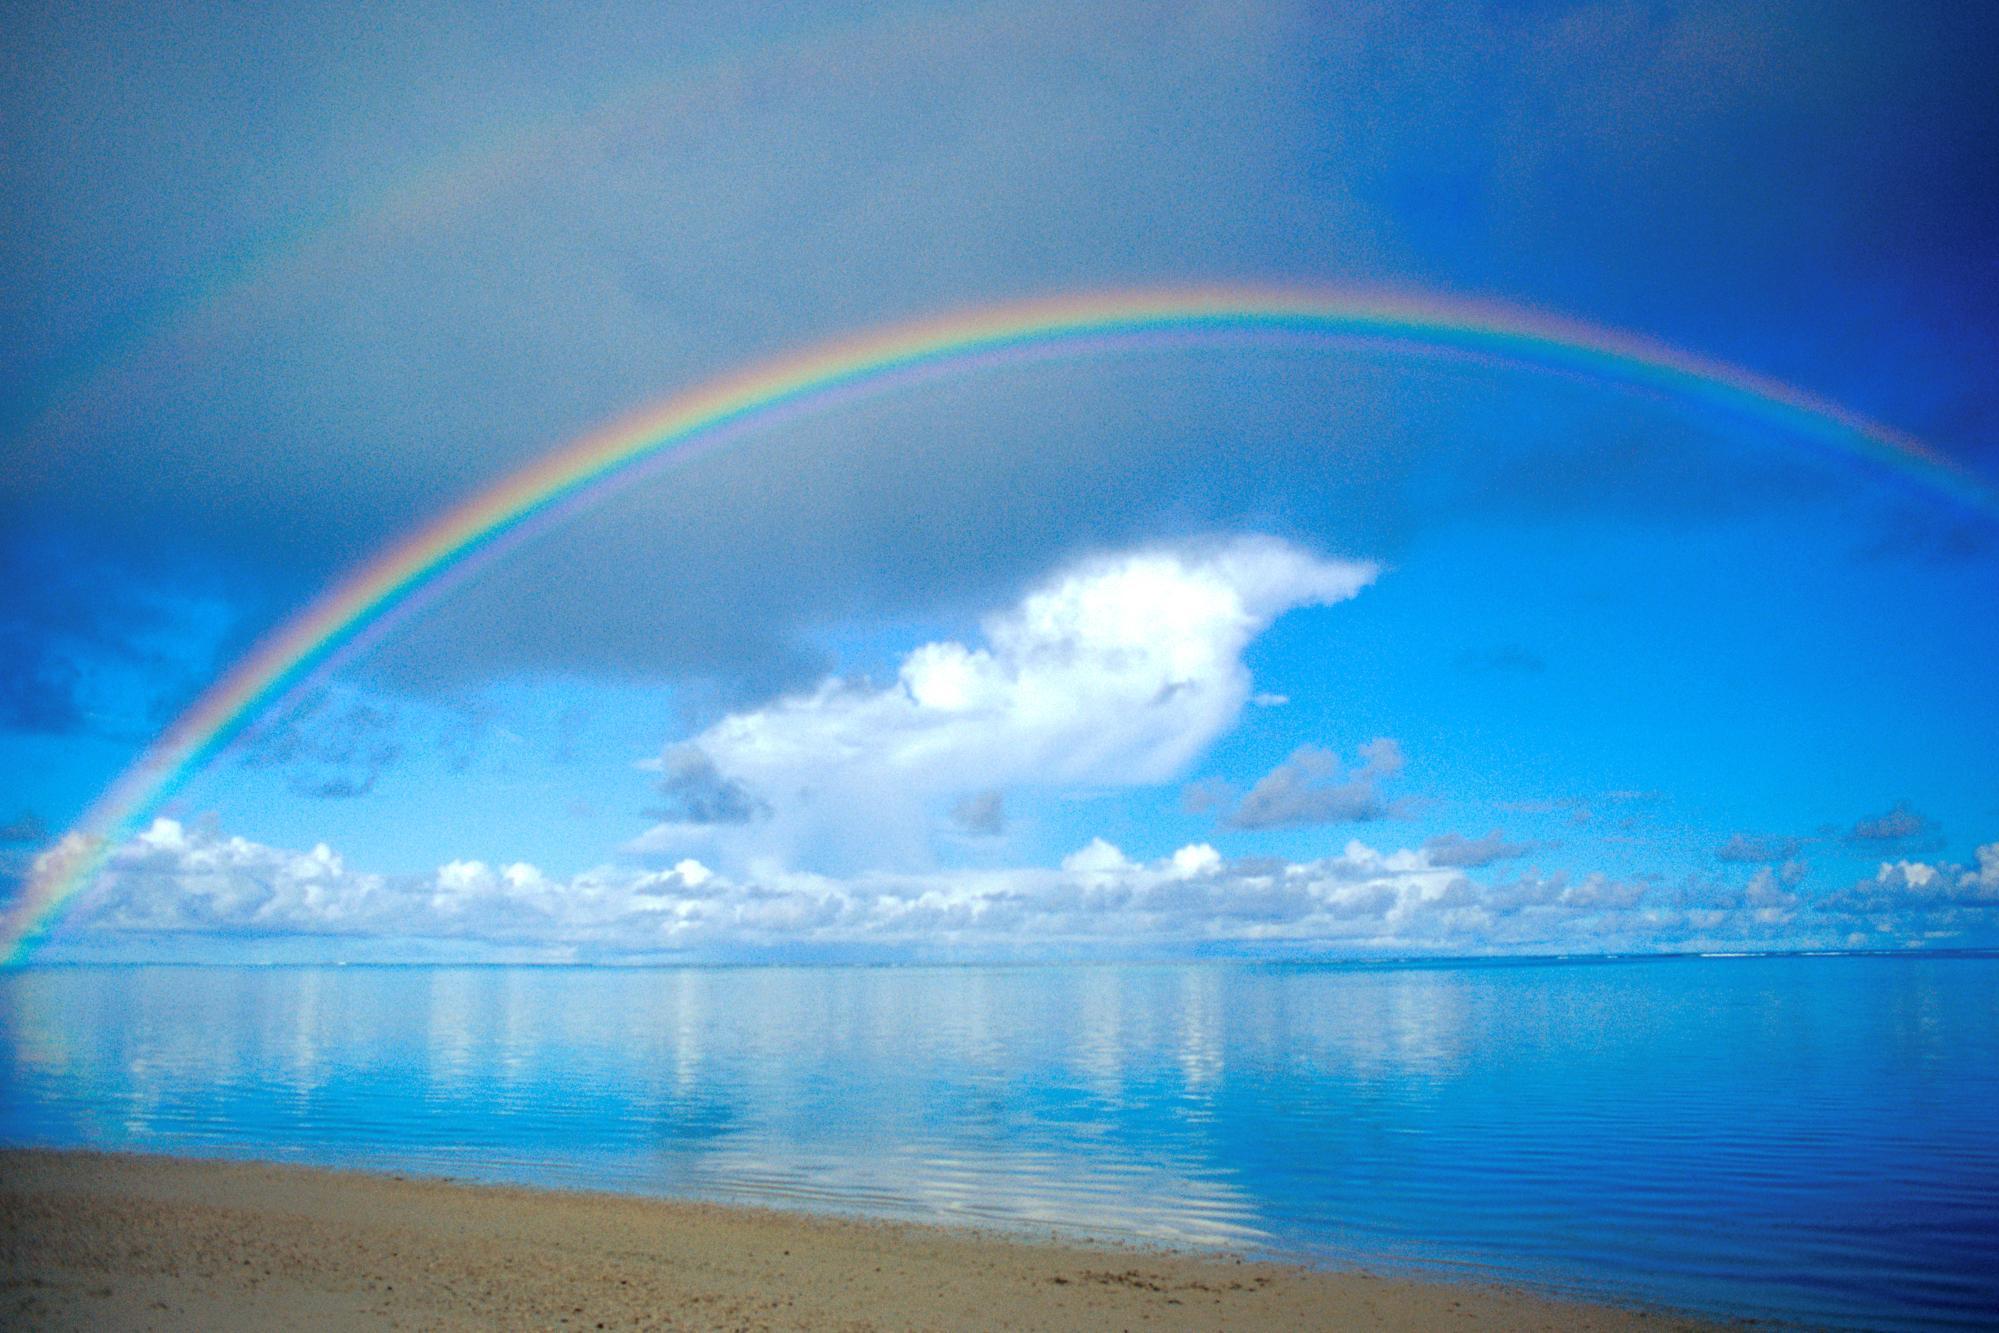 Rainbow over sea free desktop background wallpaper image